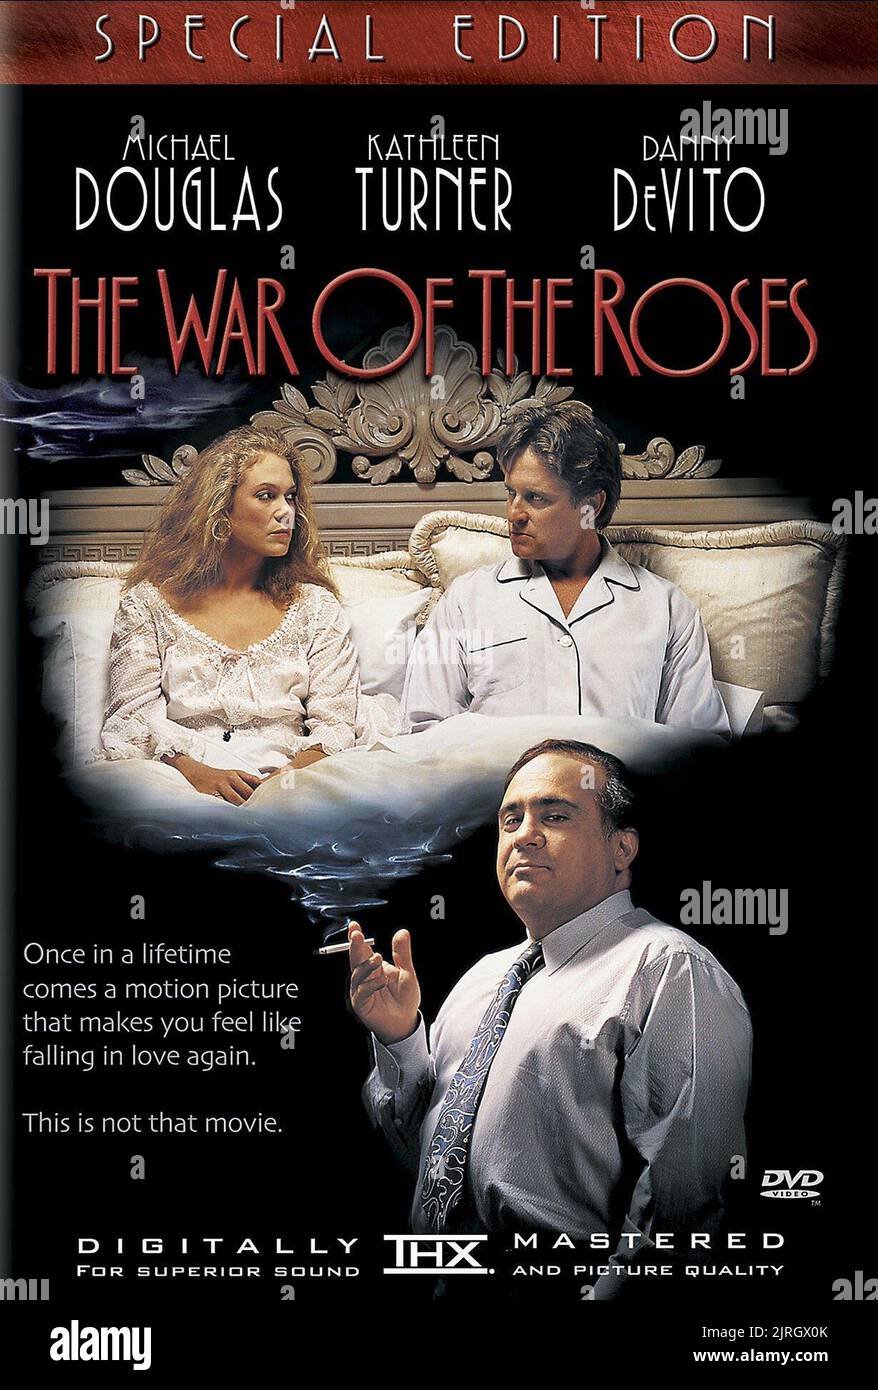 DANNY DEVITO, MICHAEL DOUGLAS, KATHLEEN TURNER POSTER, THE WAR OF THE ROSES, 1989 Stock Photo